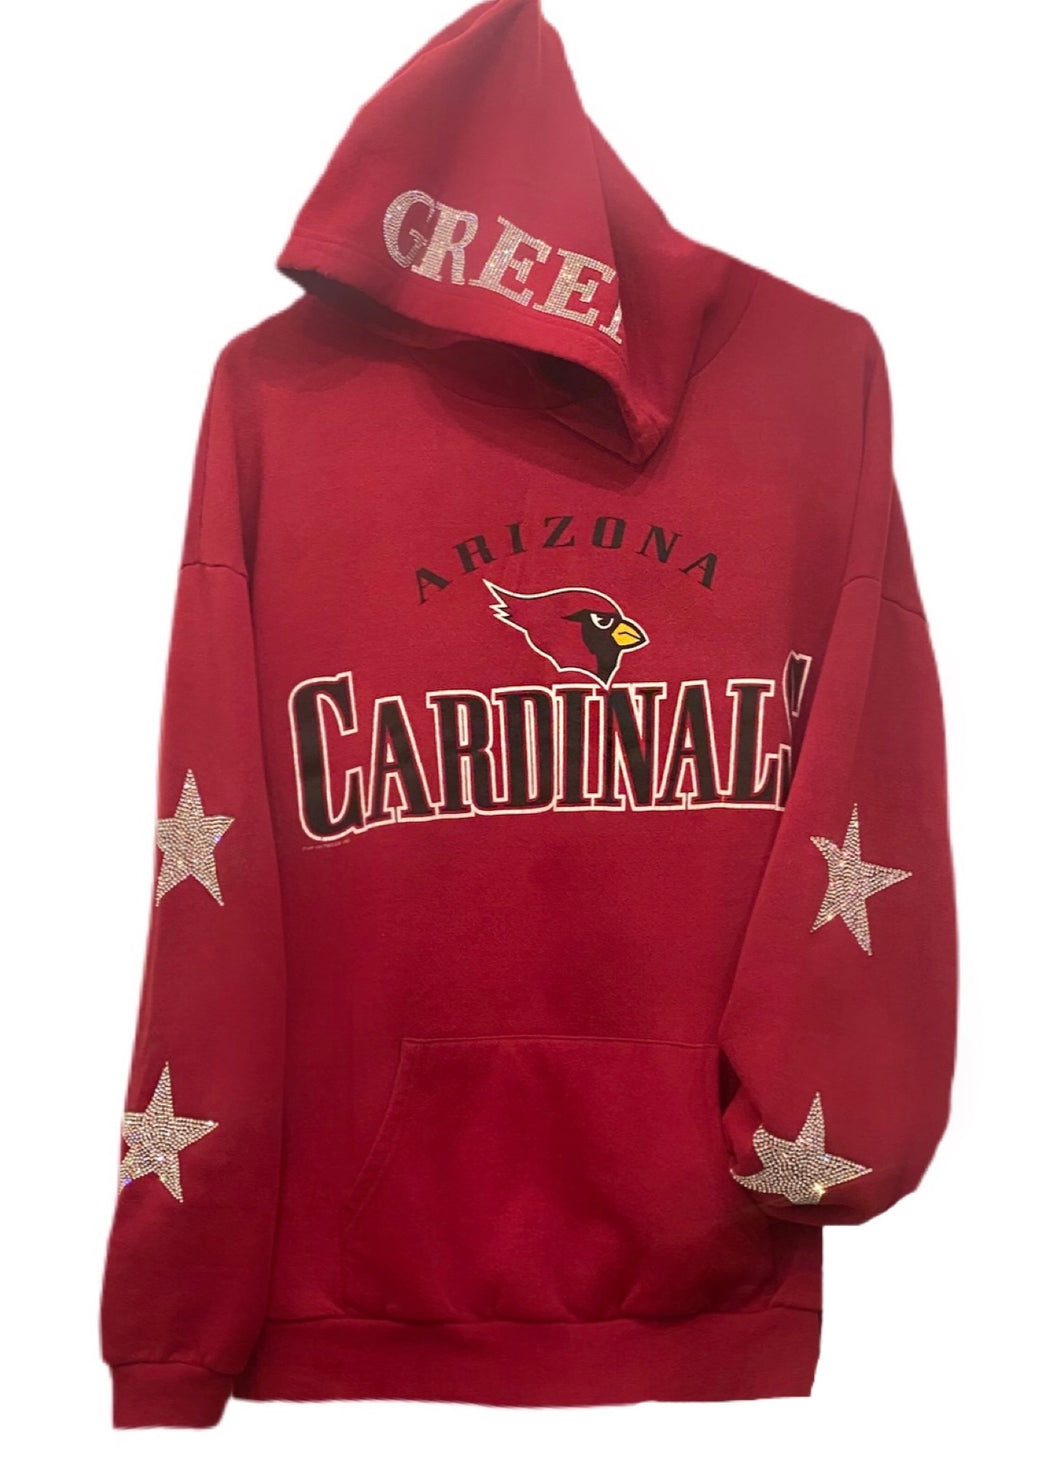 Arizona Cardinals, Football One of a KIND Vintage Sweatshirt with Crystal Star Design